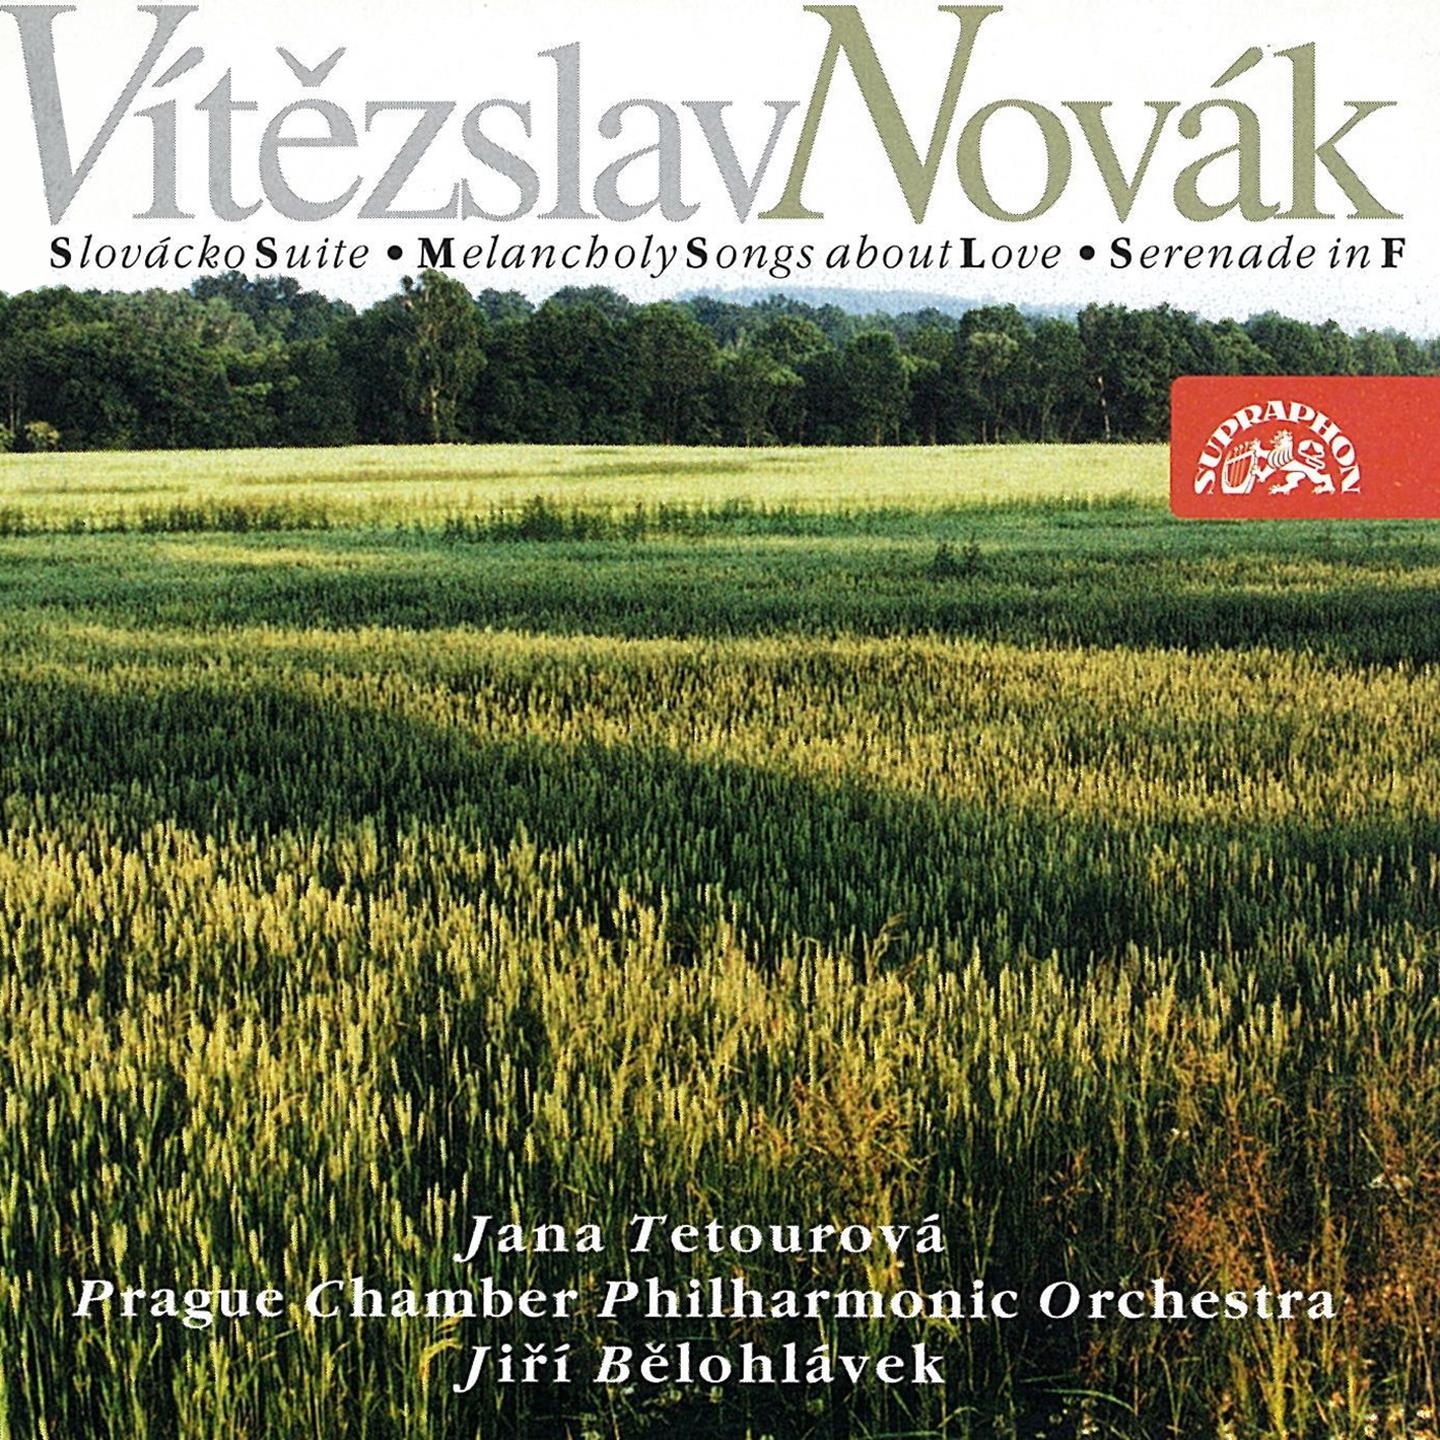 Nova k: Slovak Suite, Melancholy Songs about Love